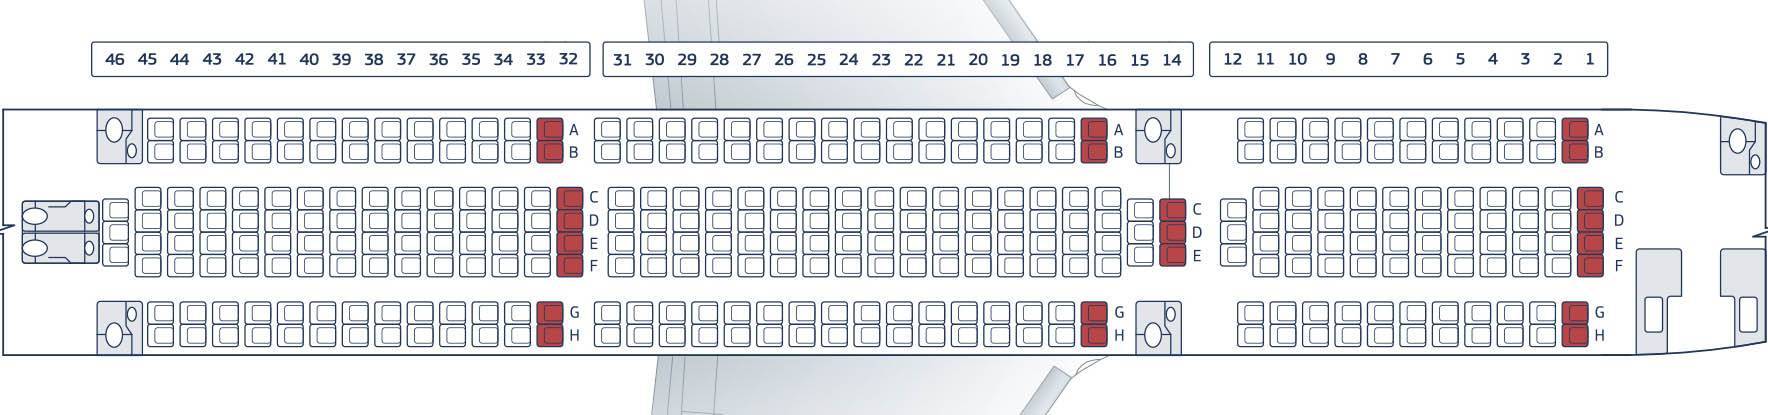 Схема салона boeing 767-200 utair